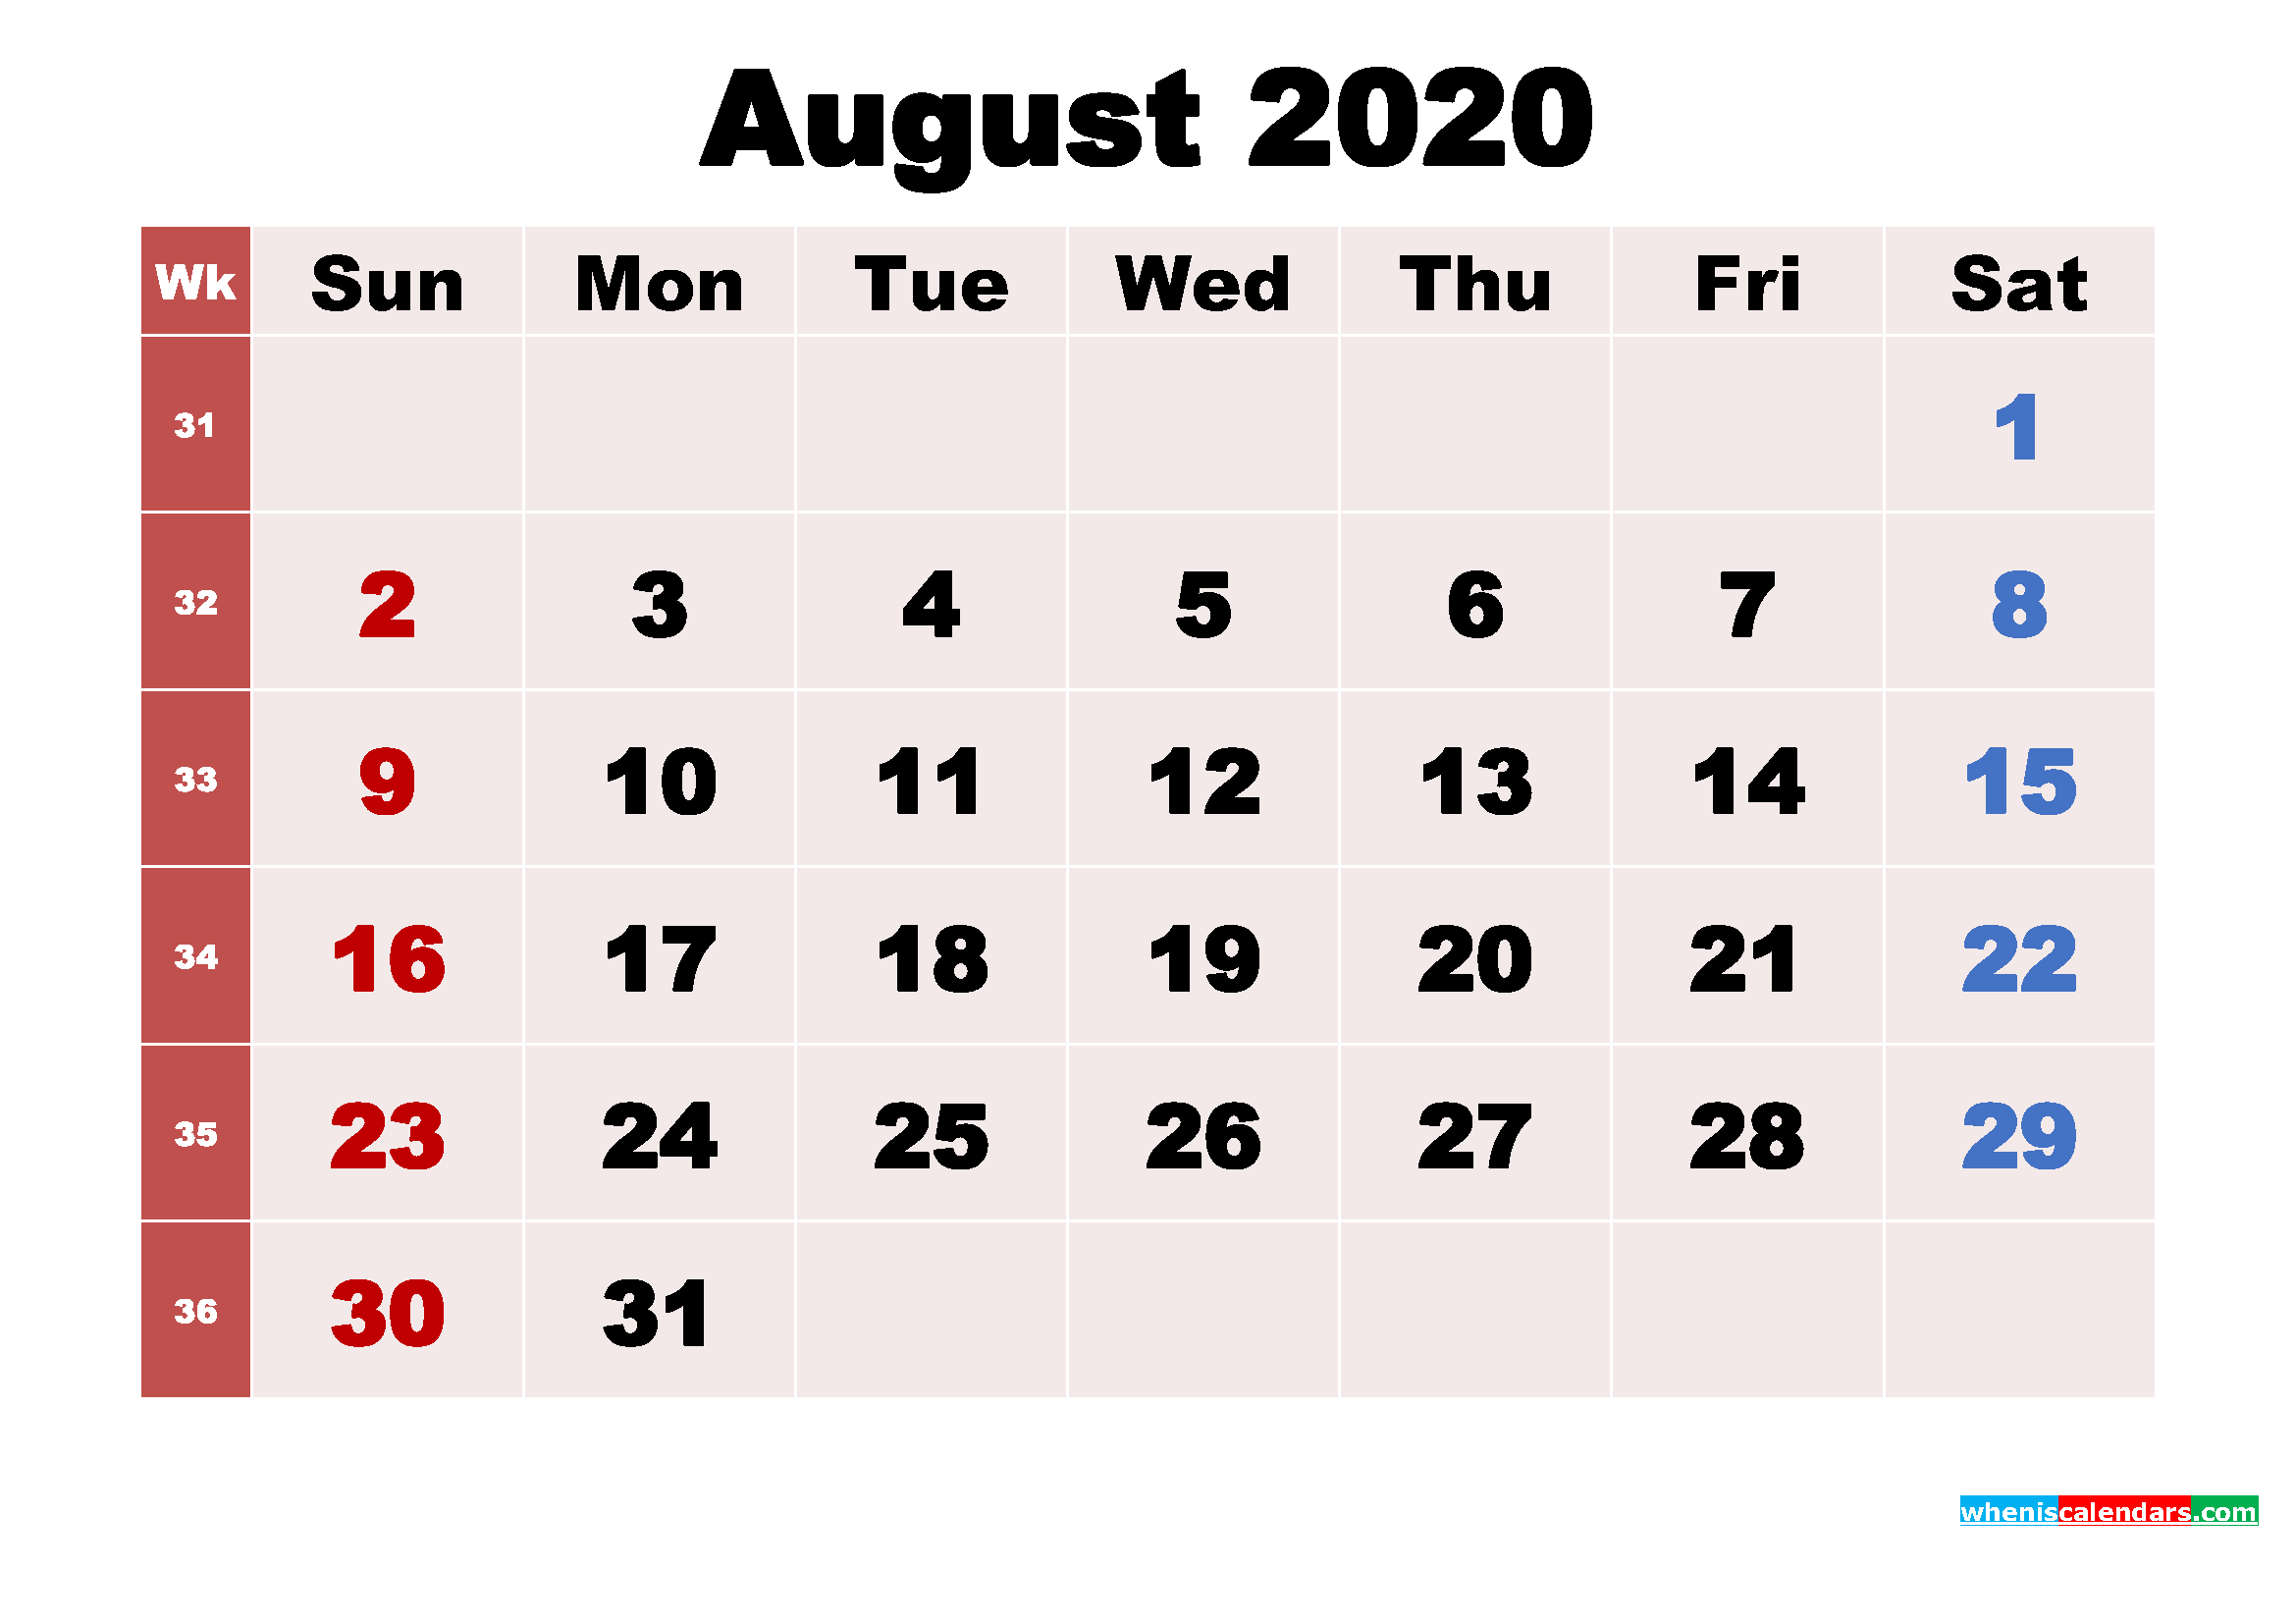 August 2020 Calendar Wallpaper Free Download. Free Printable 2020